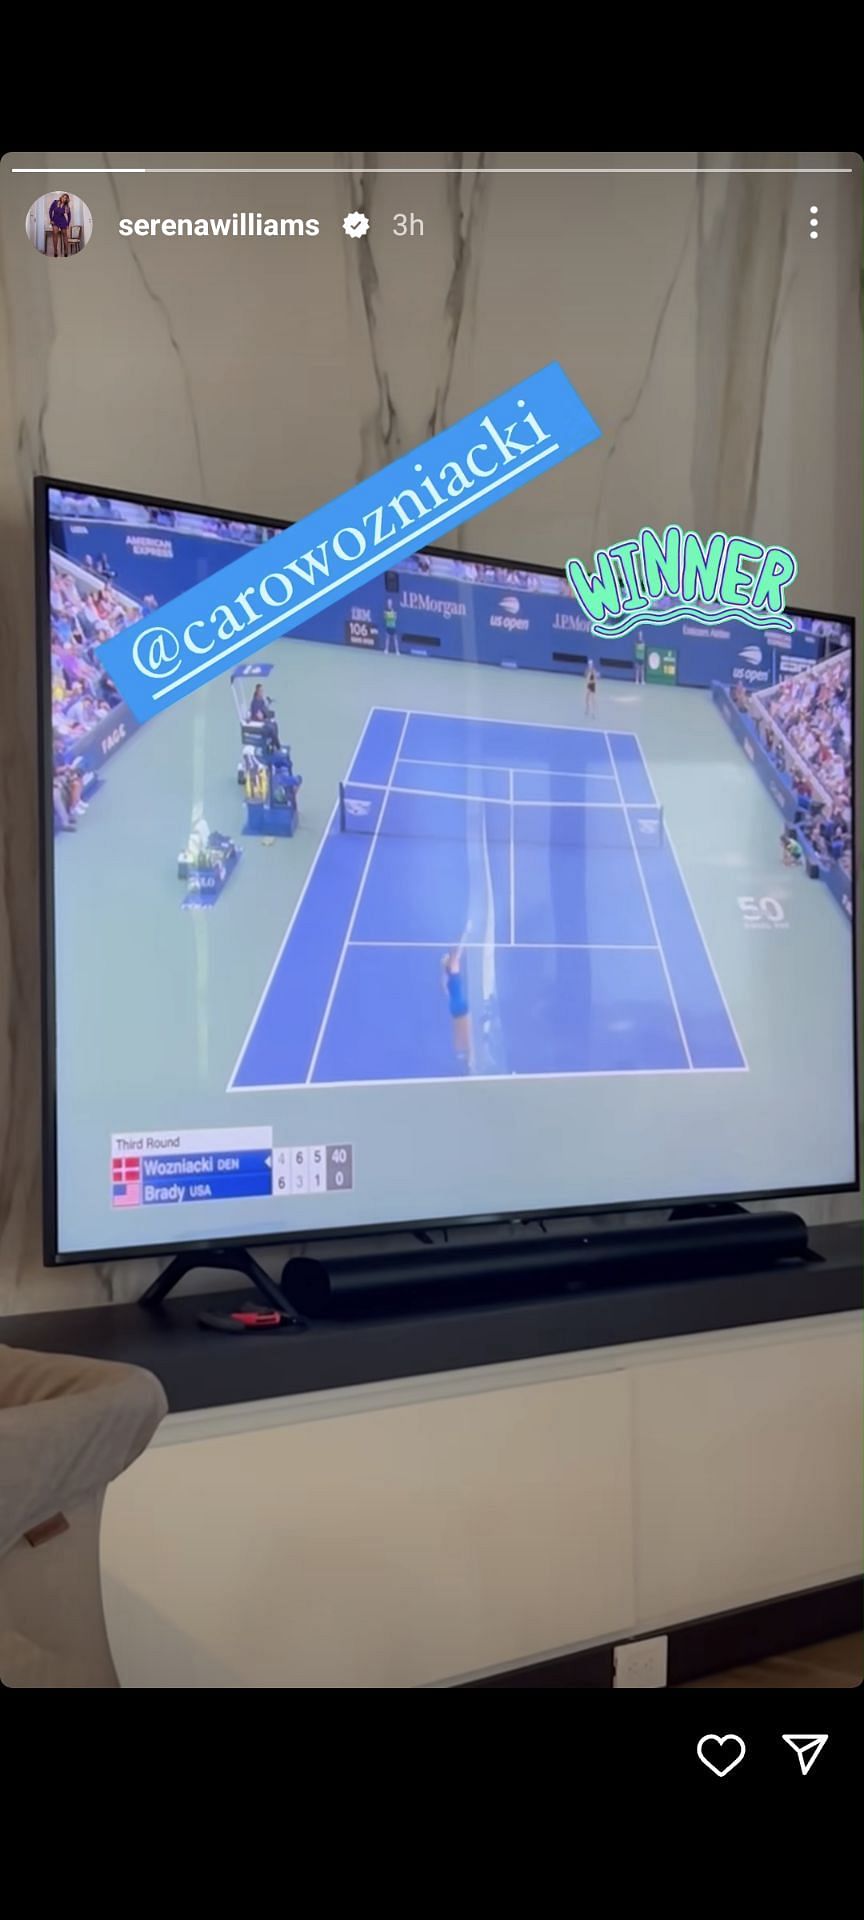 Serena Williams&#039; Instagram story